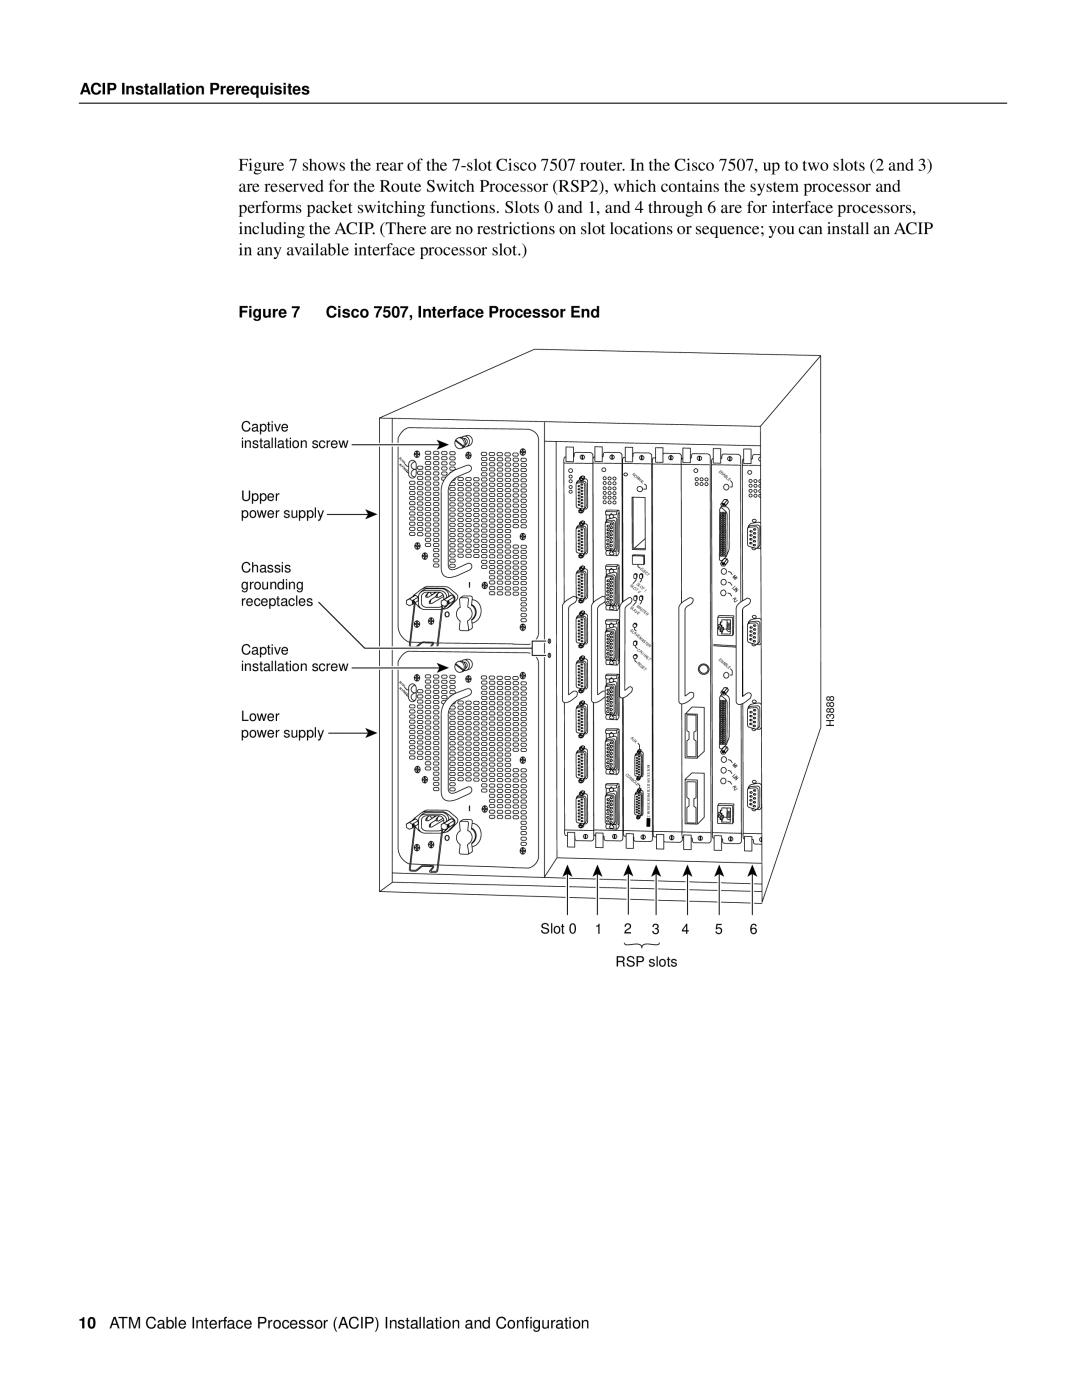 Cisco Systems ACIP-SM(=) manual ATM Cable Interface Processor ACIP Installation and Conﬁguration, H3888 